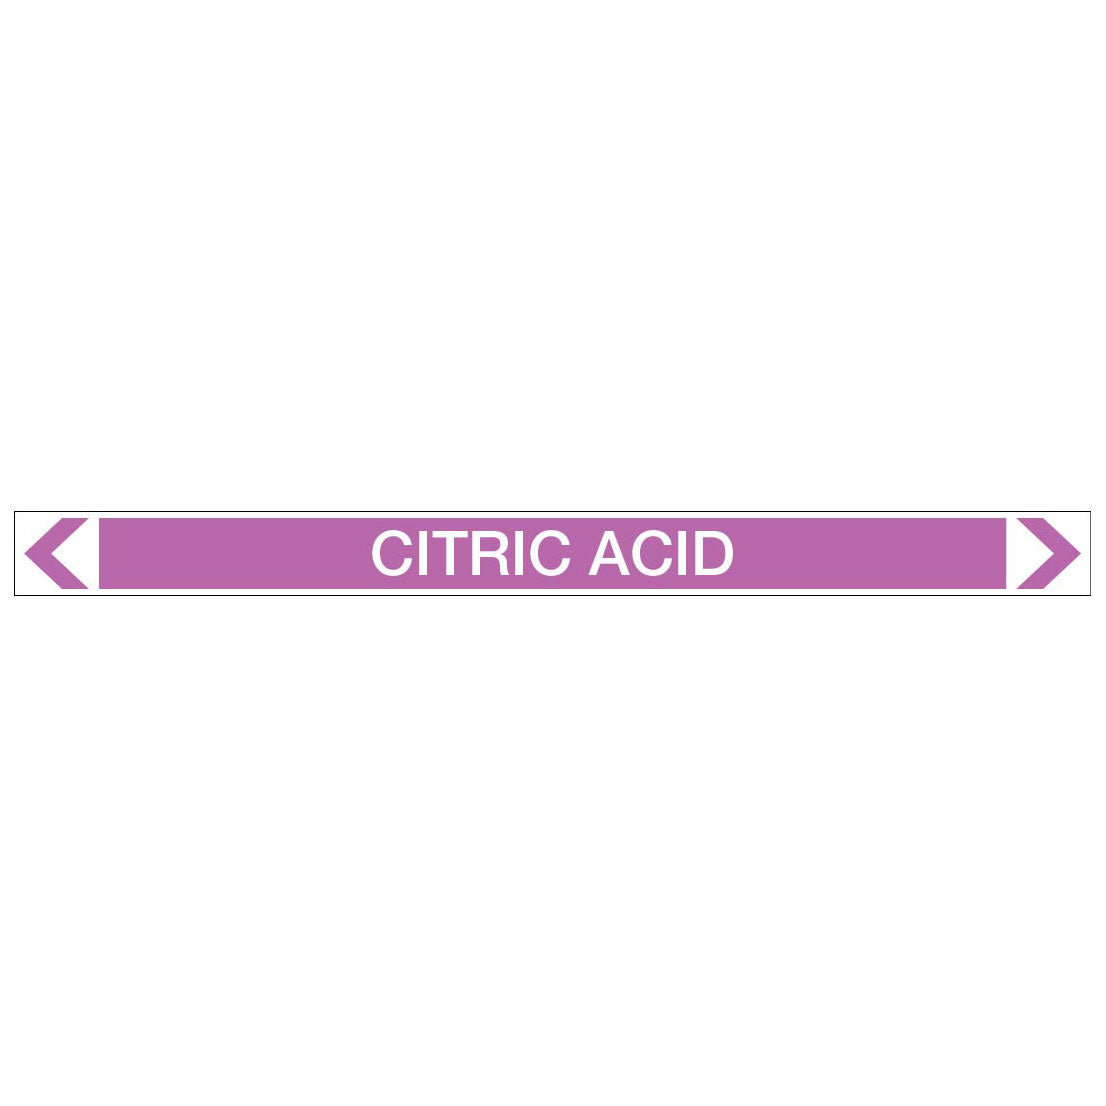 Alkalis / Acids - Citric Acid - Pipe Marker Sticker